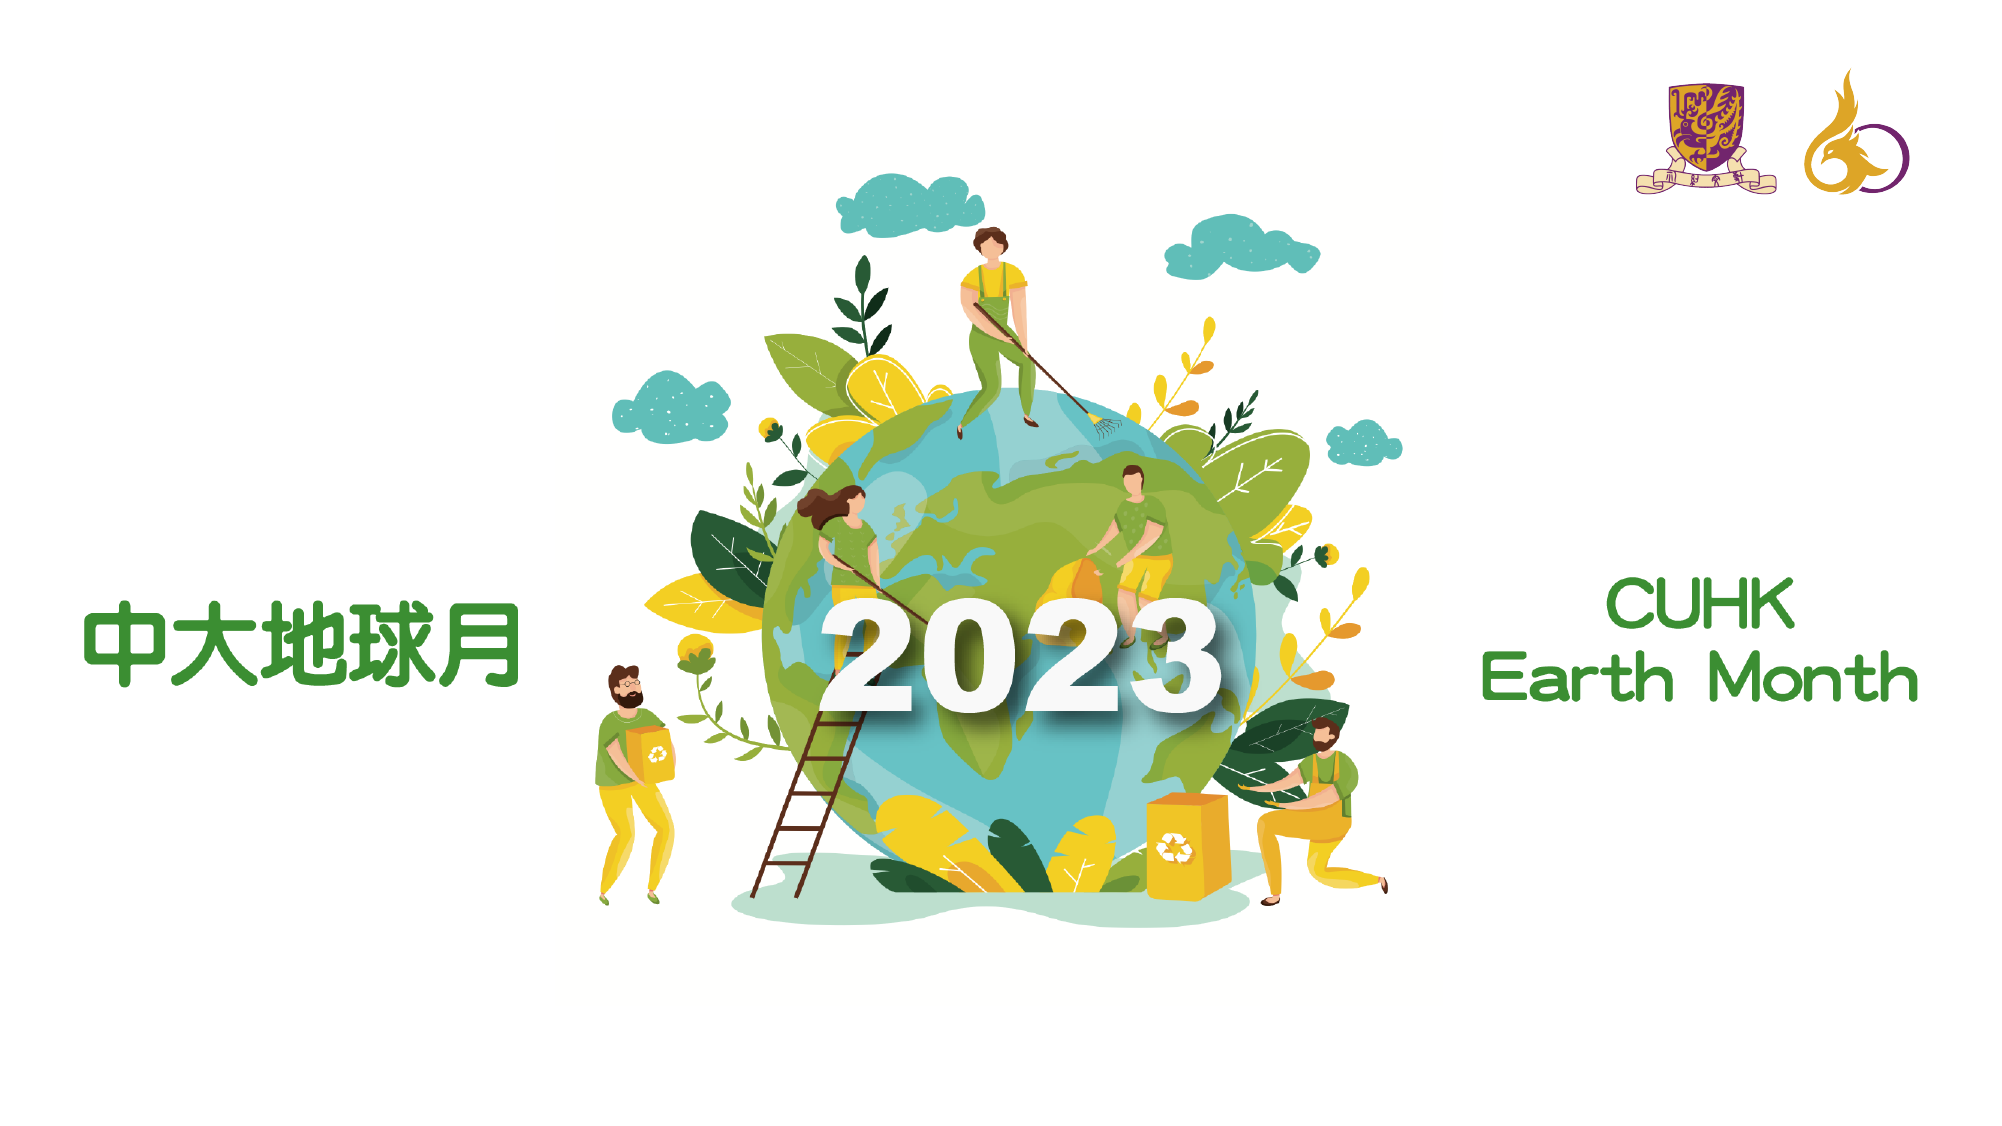 CUHK Earth Month Banner 2023